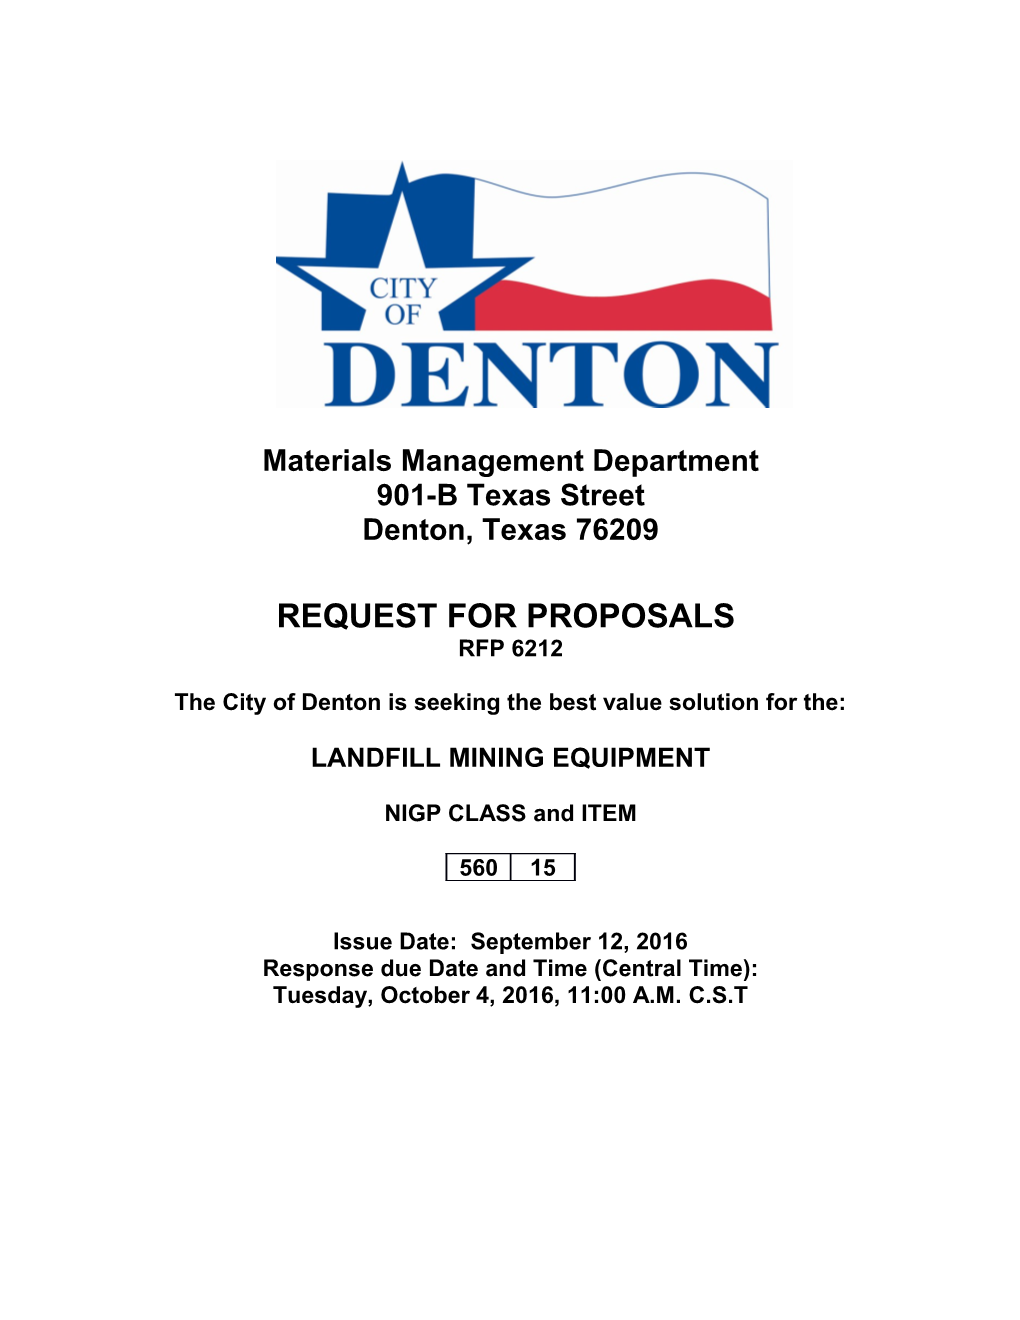 RFP for Supply of Landfill Mining Equipment